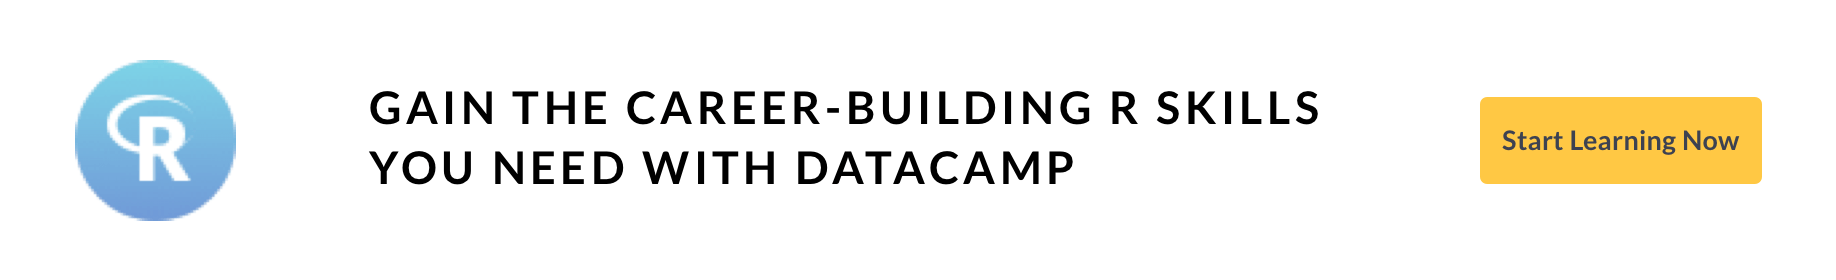 Career Building R Skills with DataCamp